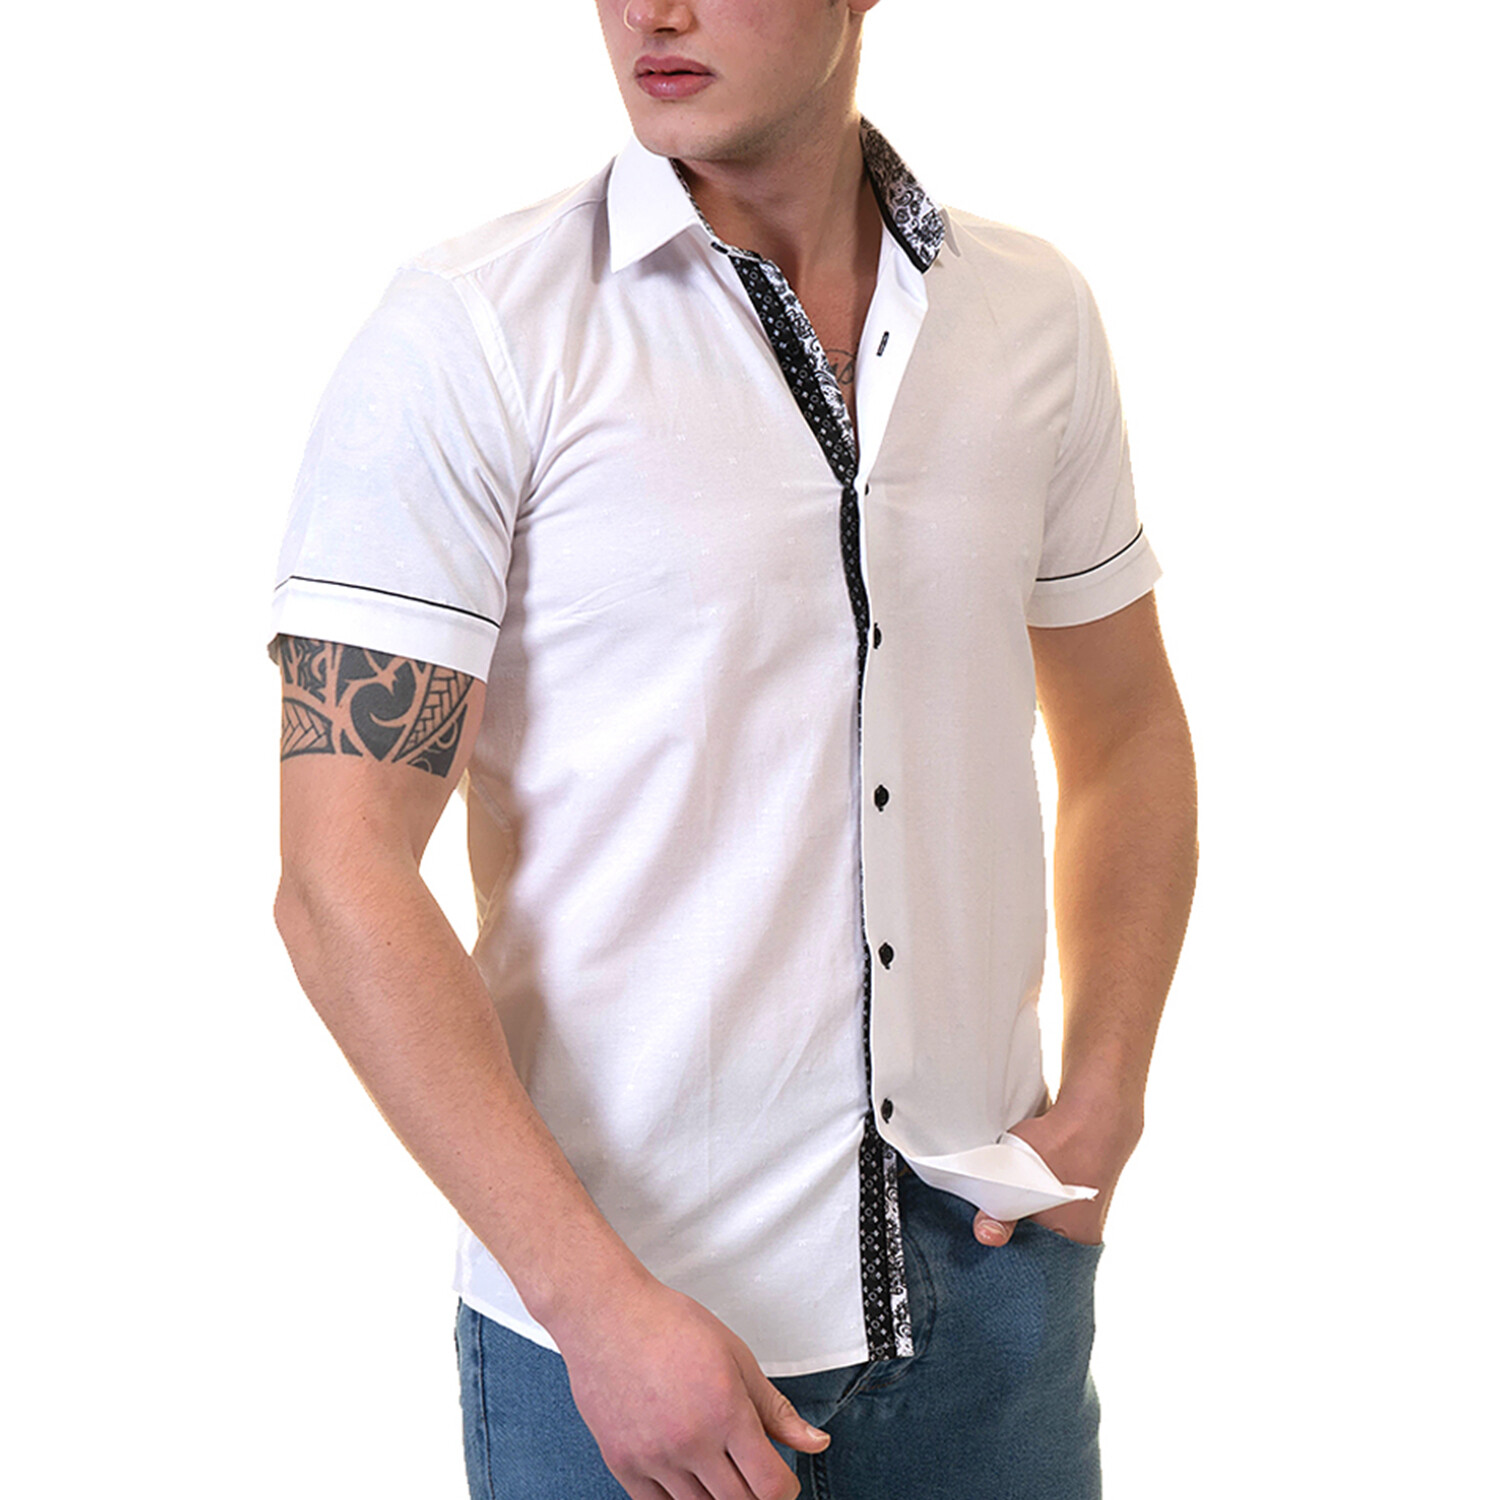 European Premium Quality Short Sleeve Shirt // Solid White + Black ...